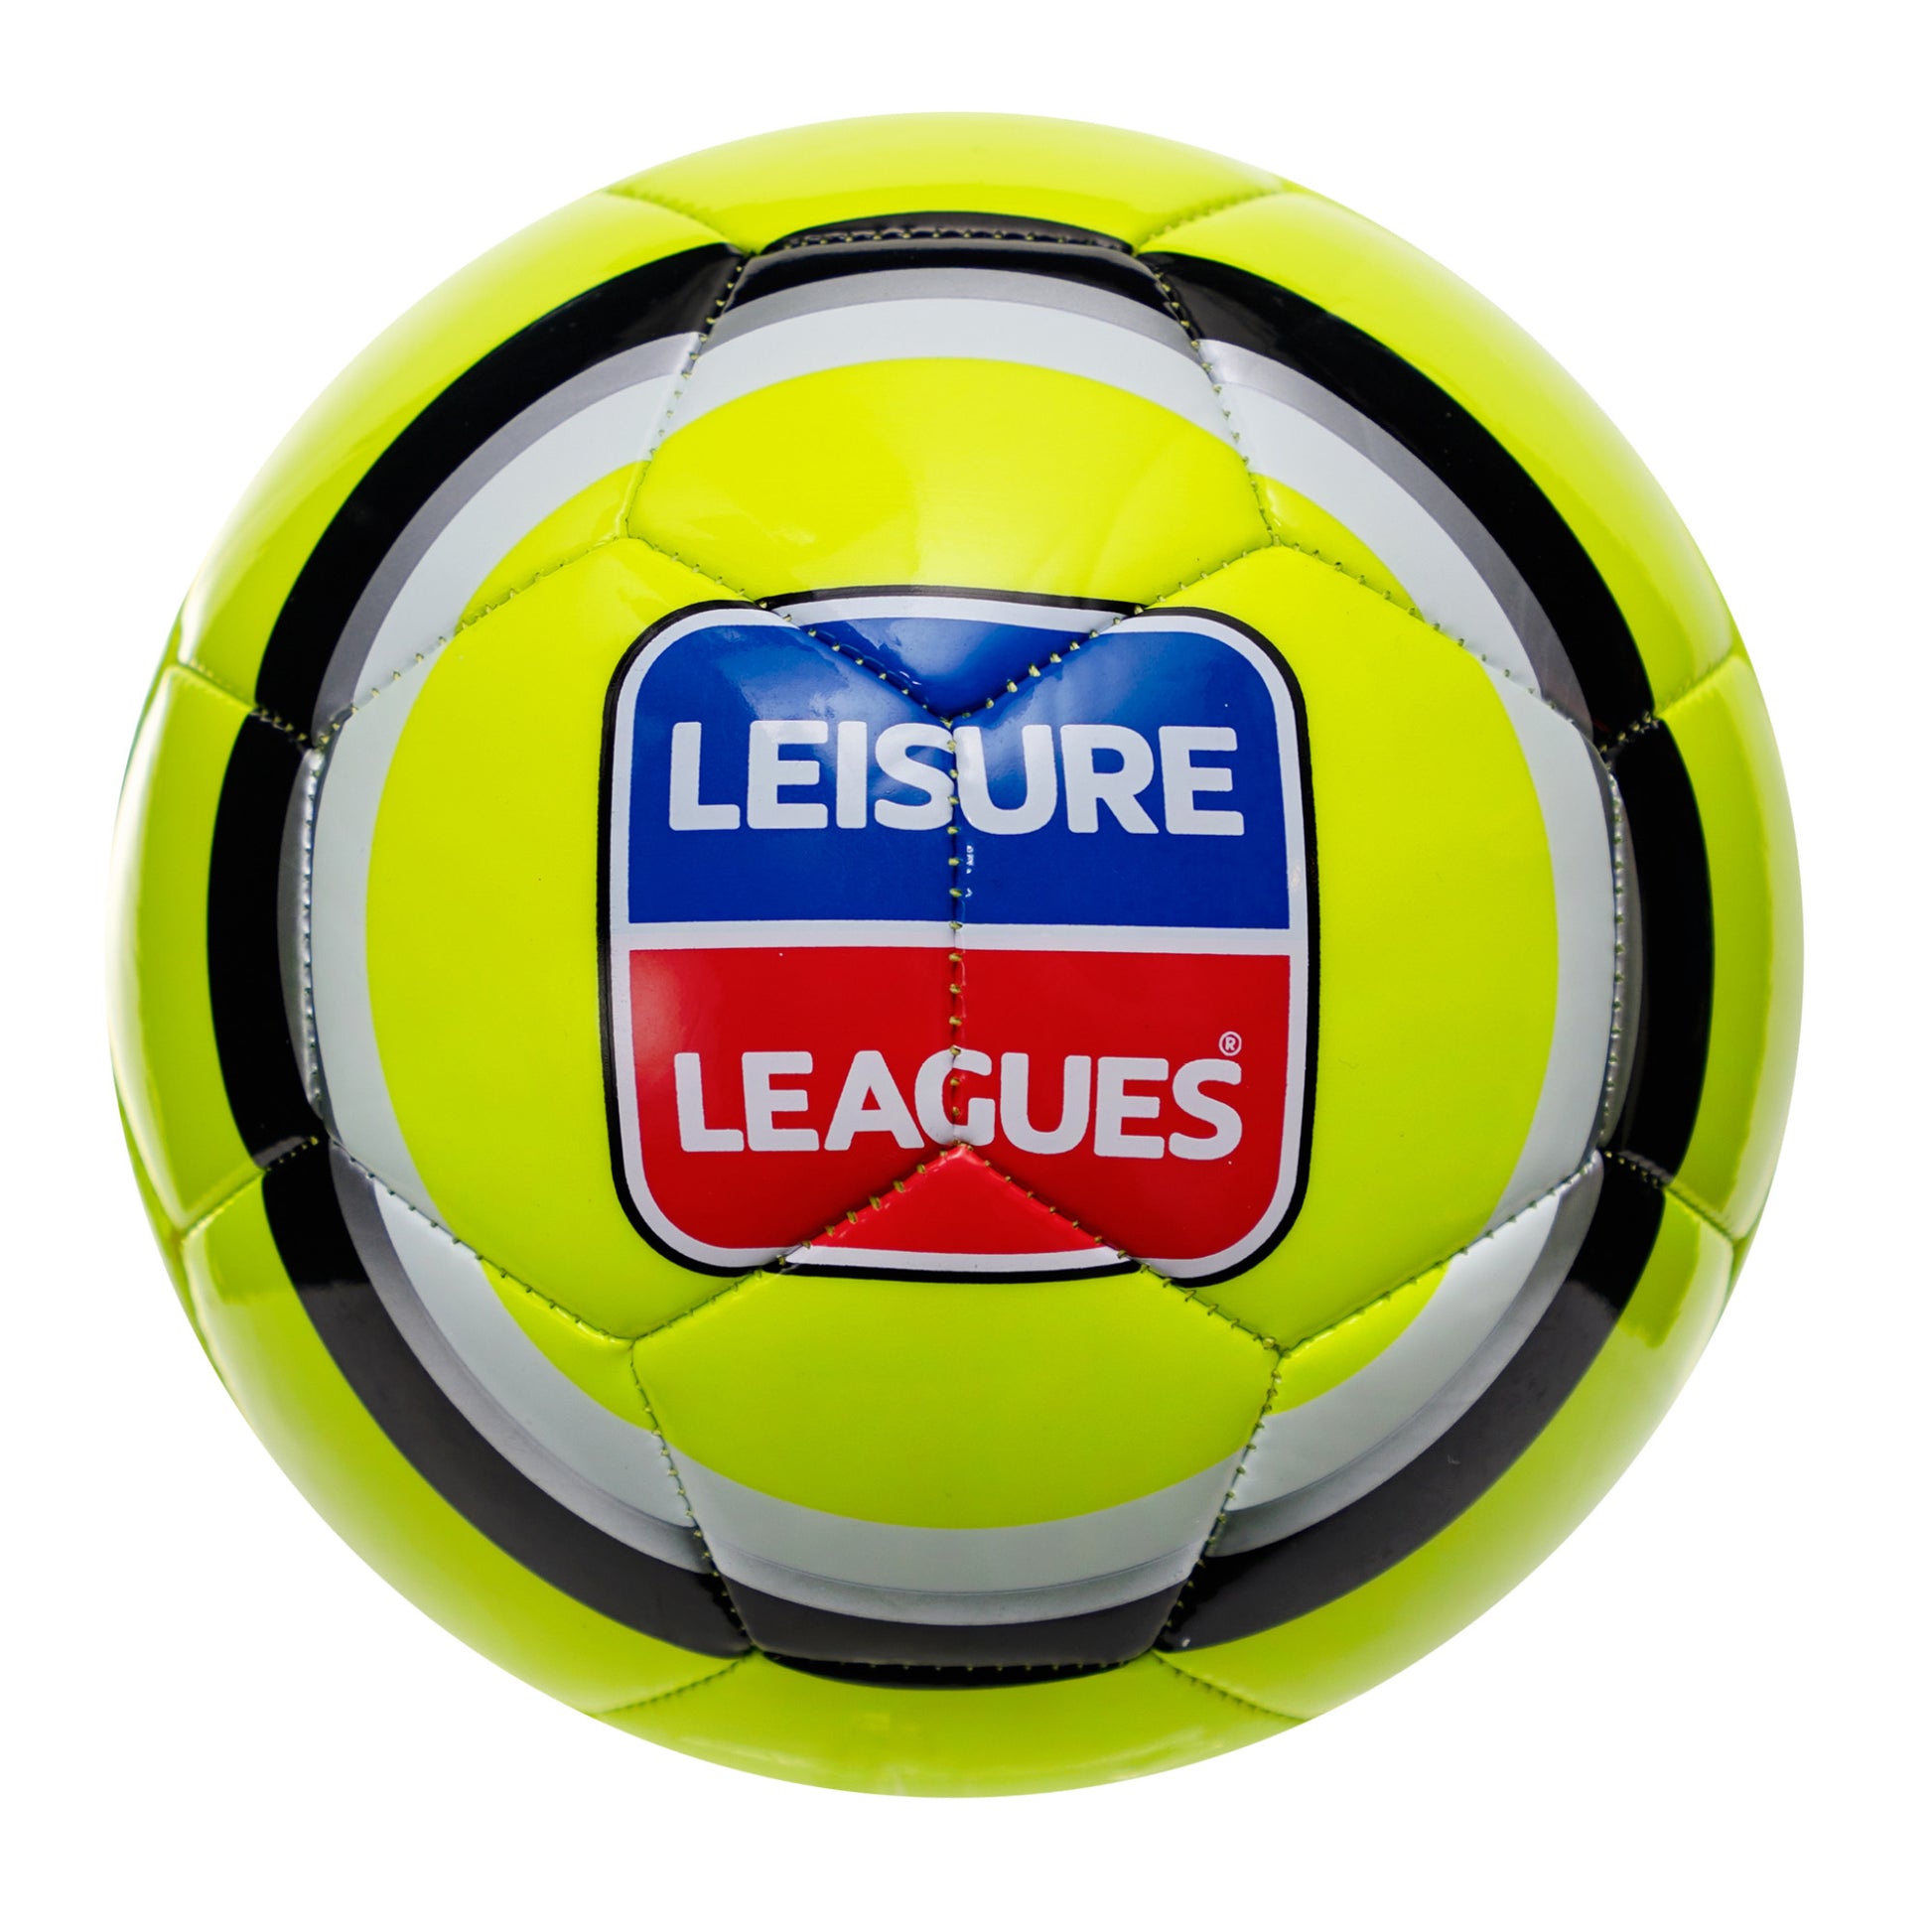 Leisure leagues football Size 5 Football Yellow Championship